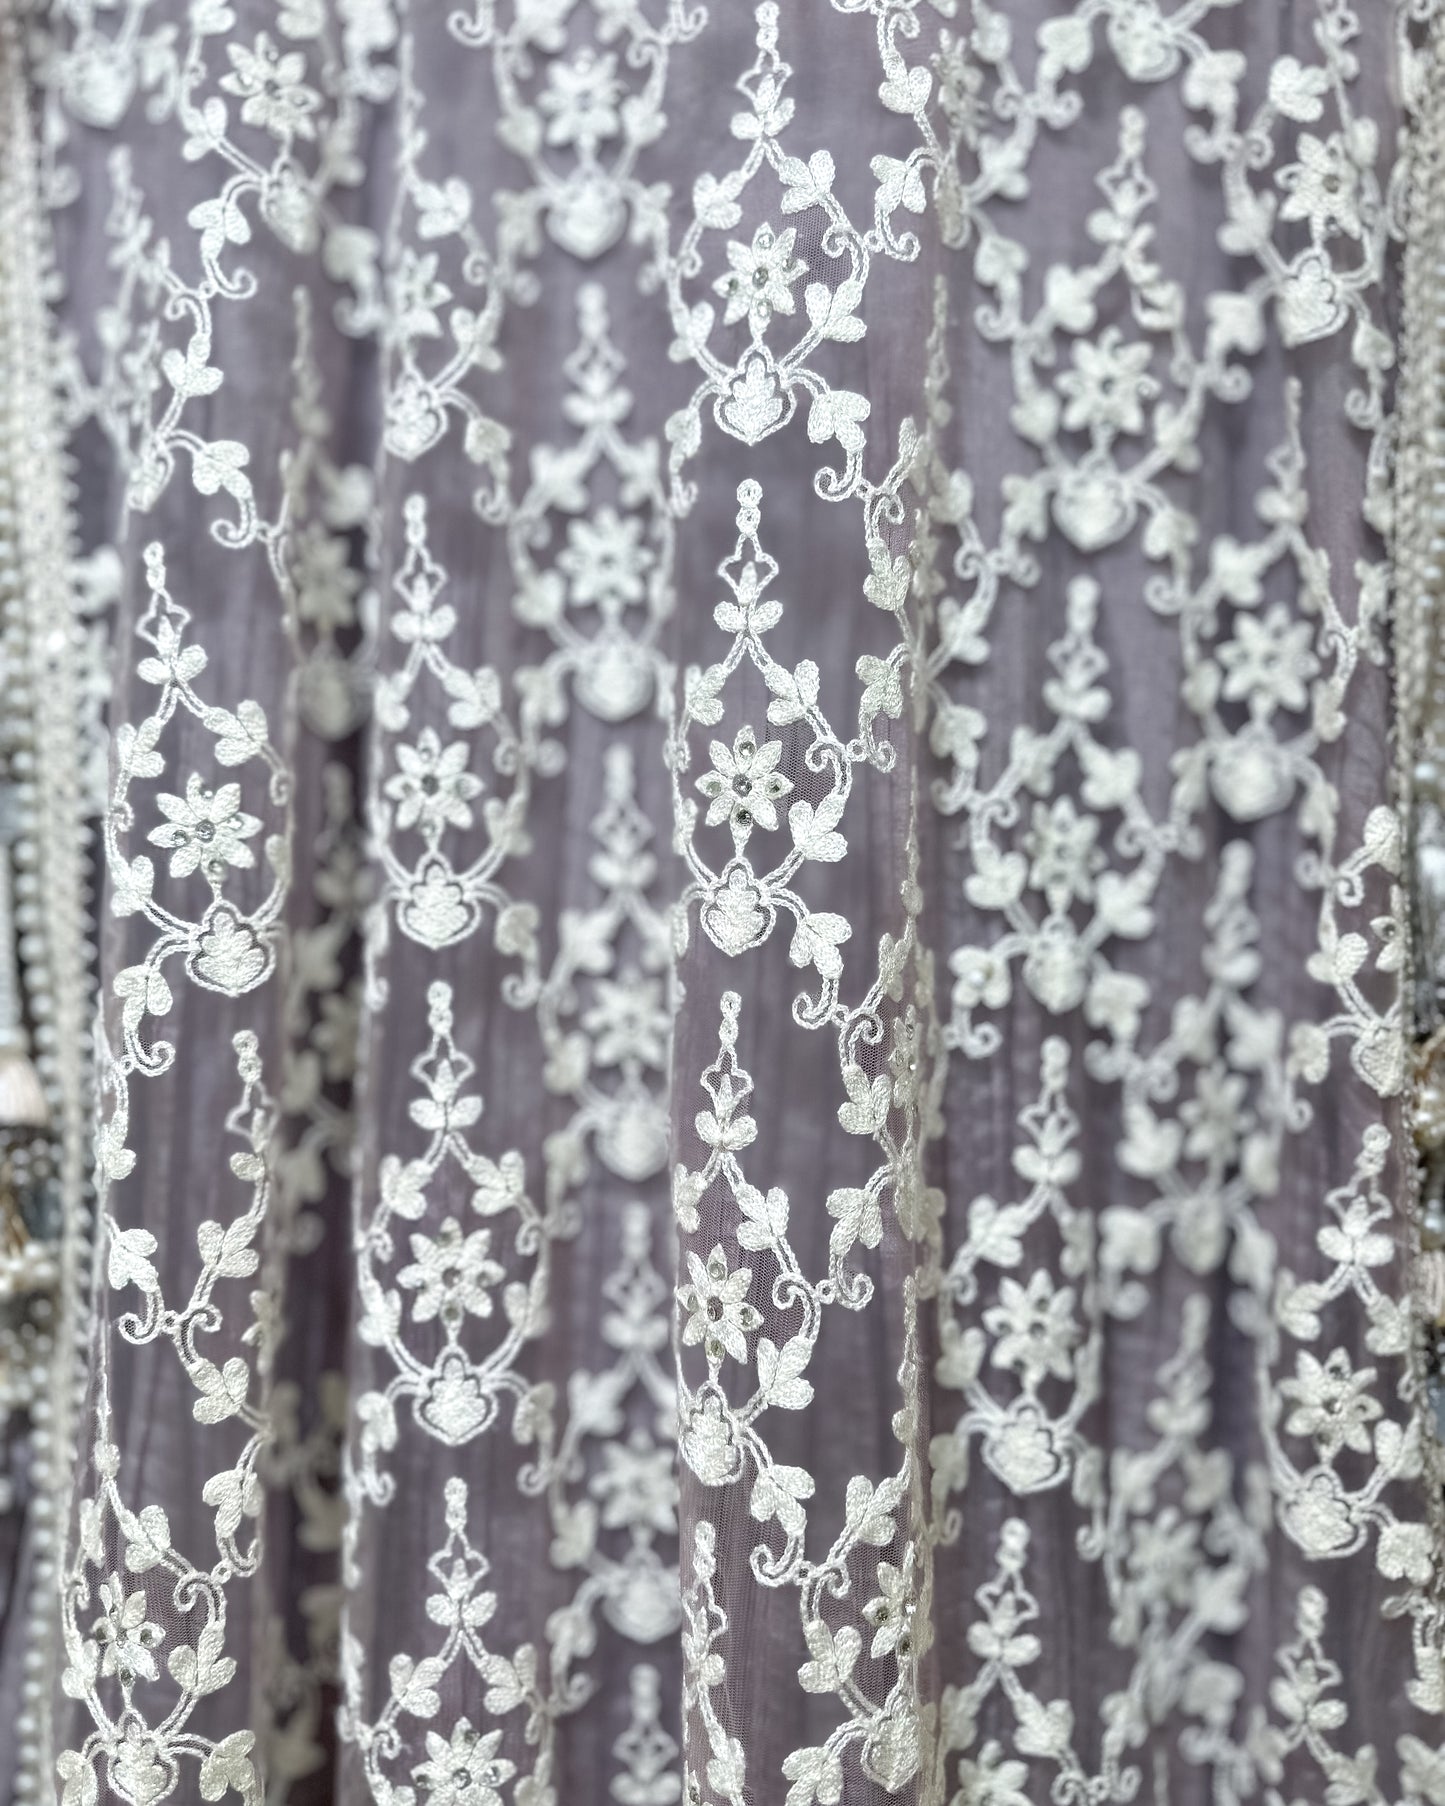 Lilac Long Dress - Libas